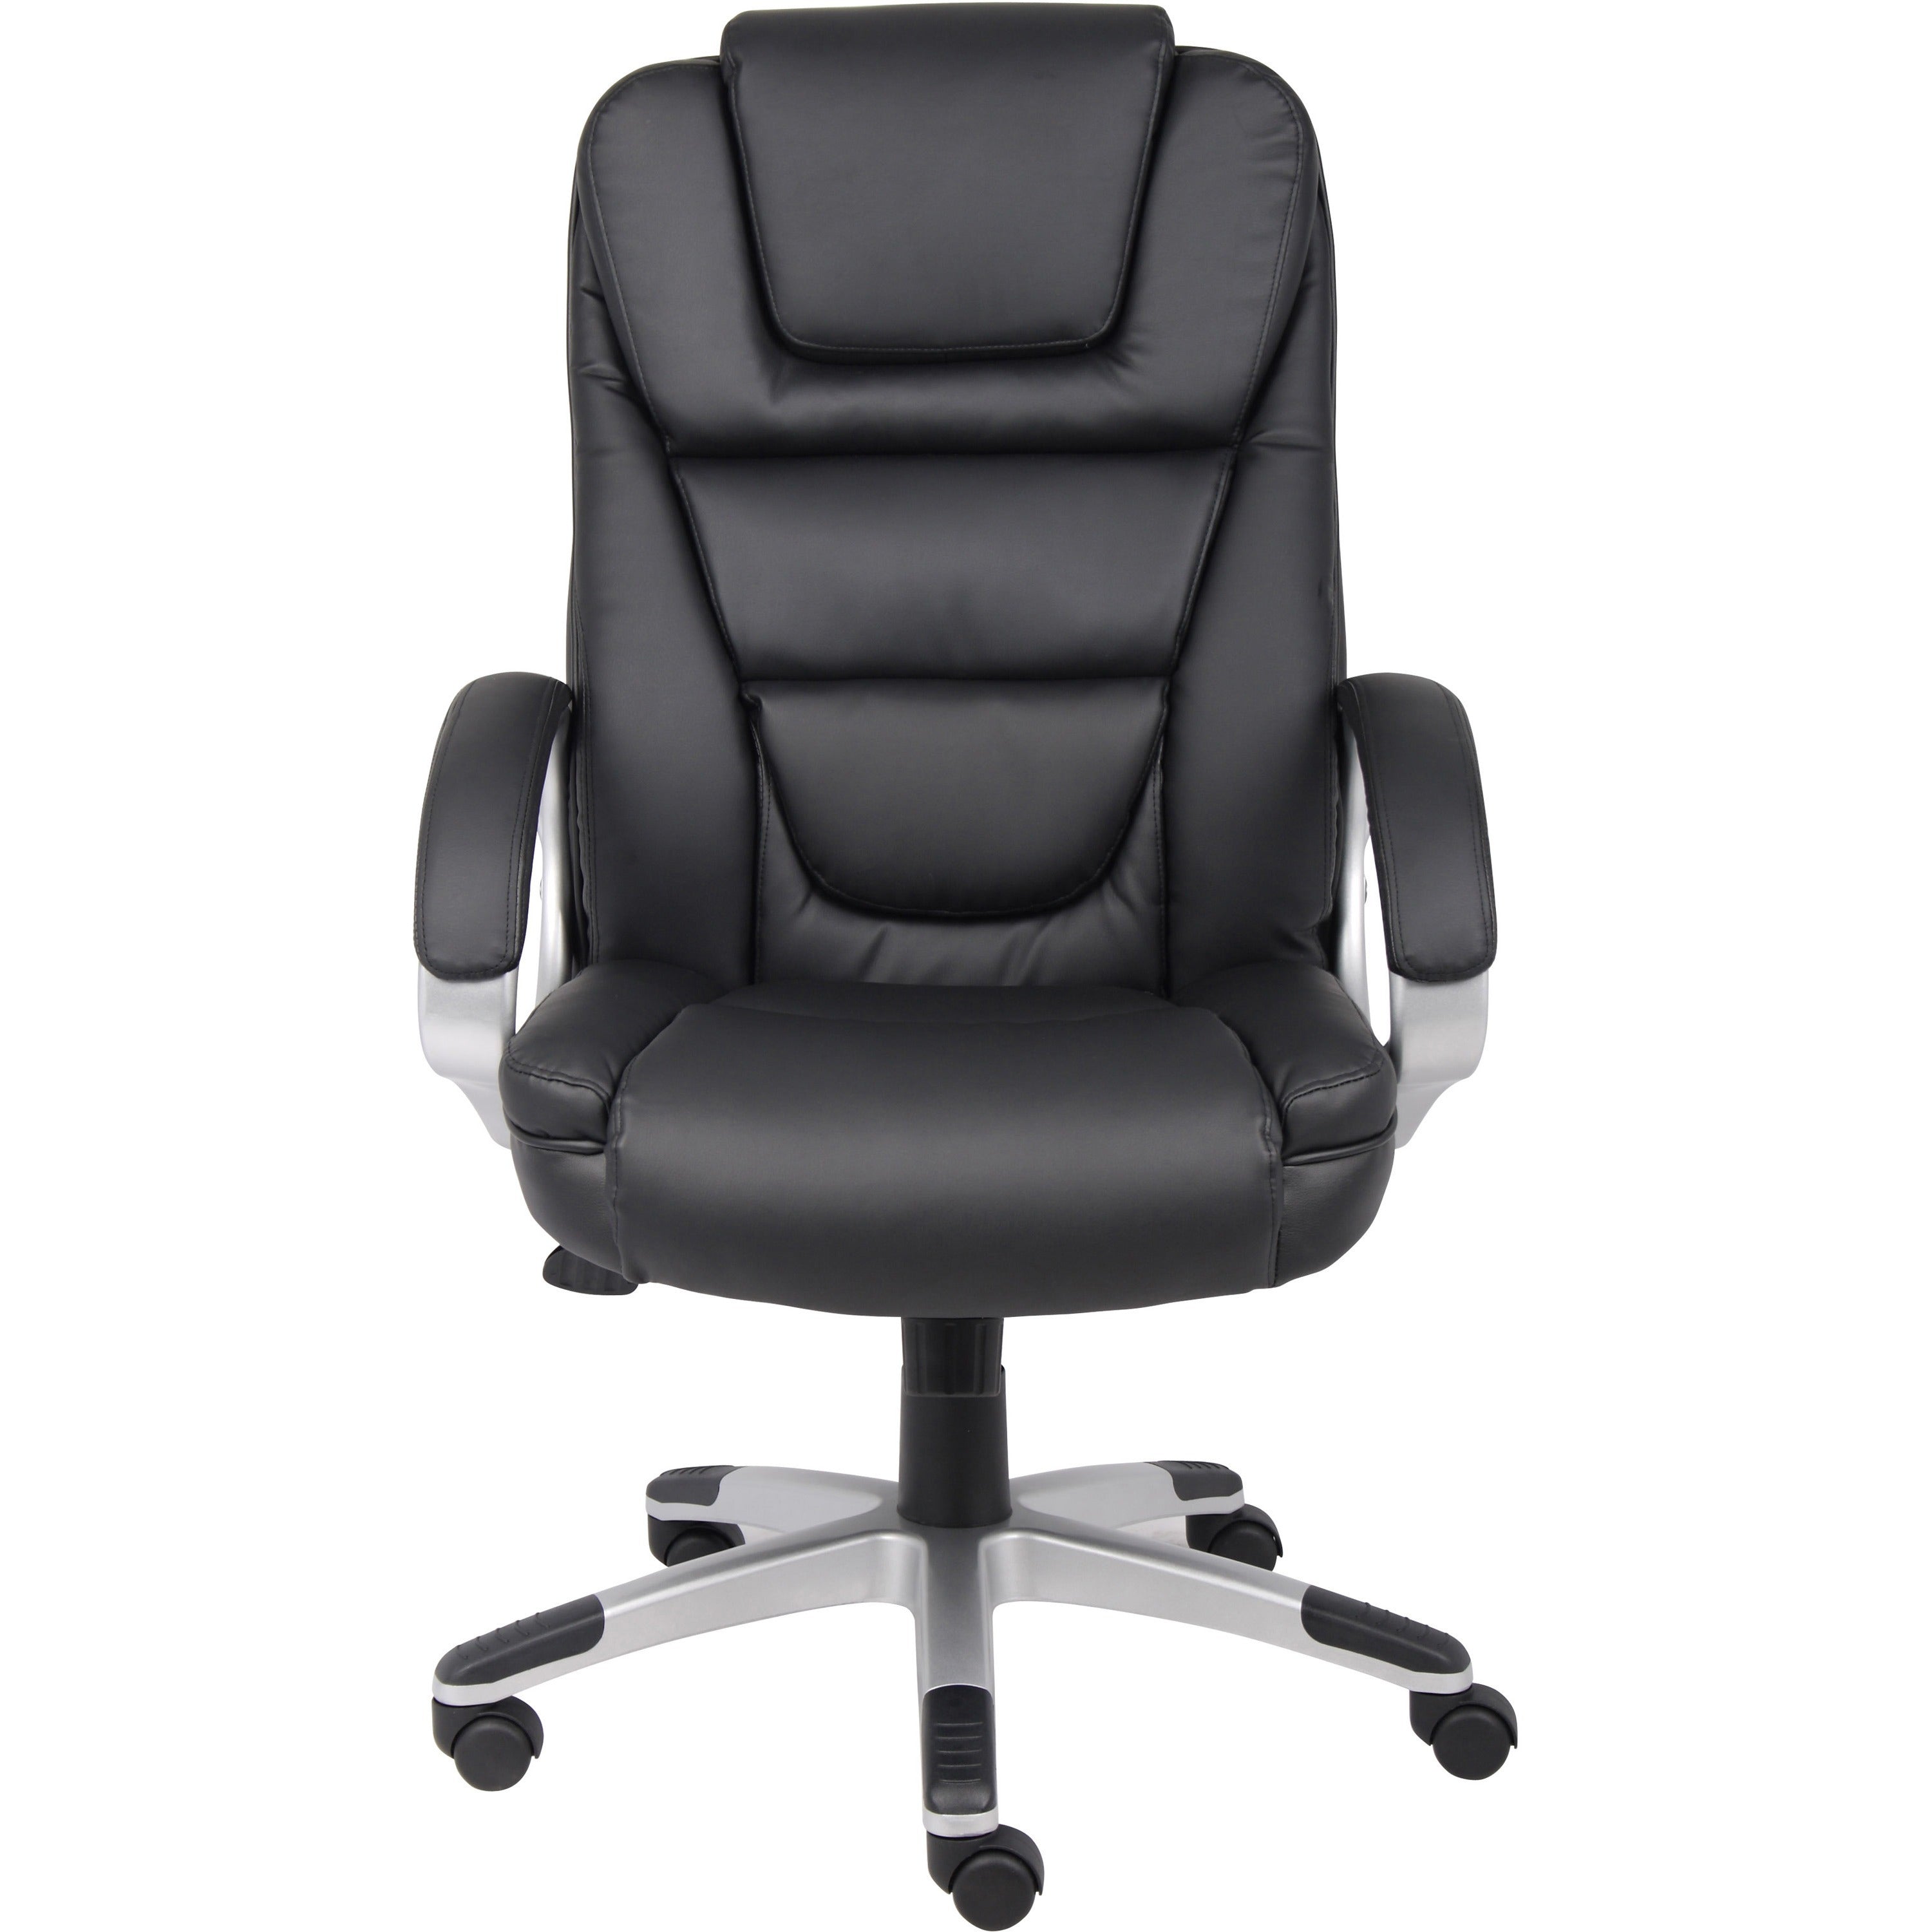 Boss High Back Executive Chair - Black LeatherPlus Seat - Black, Gray Nylon Frame - 5-star Base - 1 Each - 2